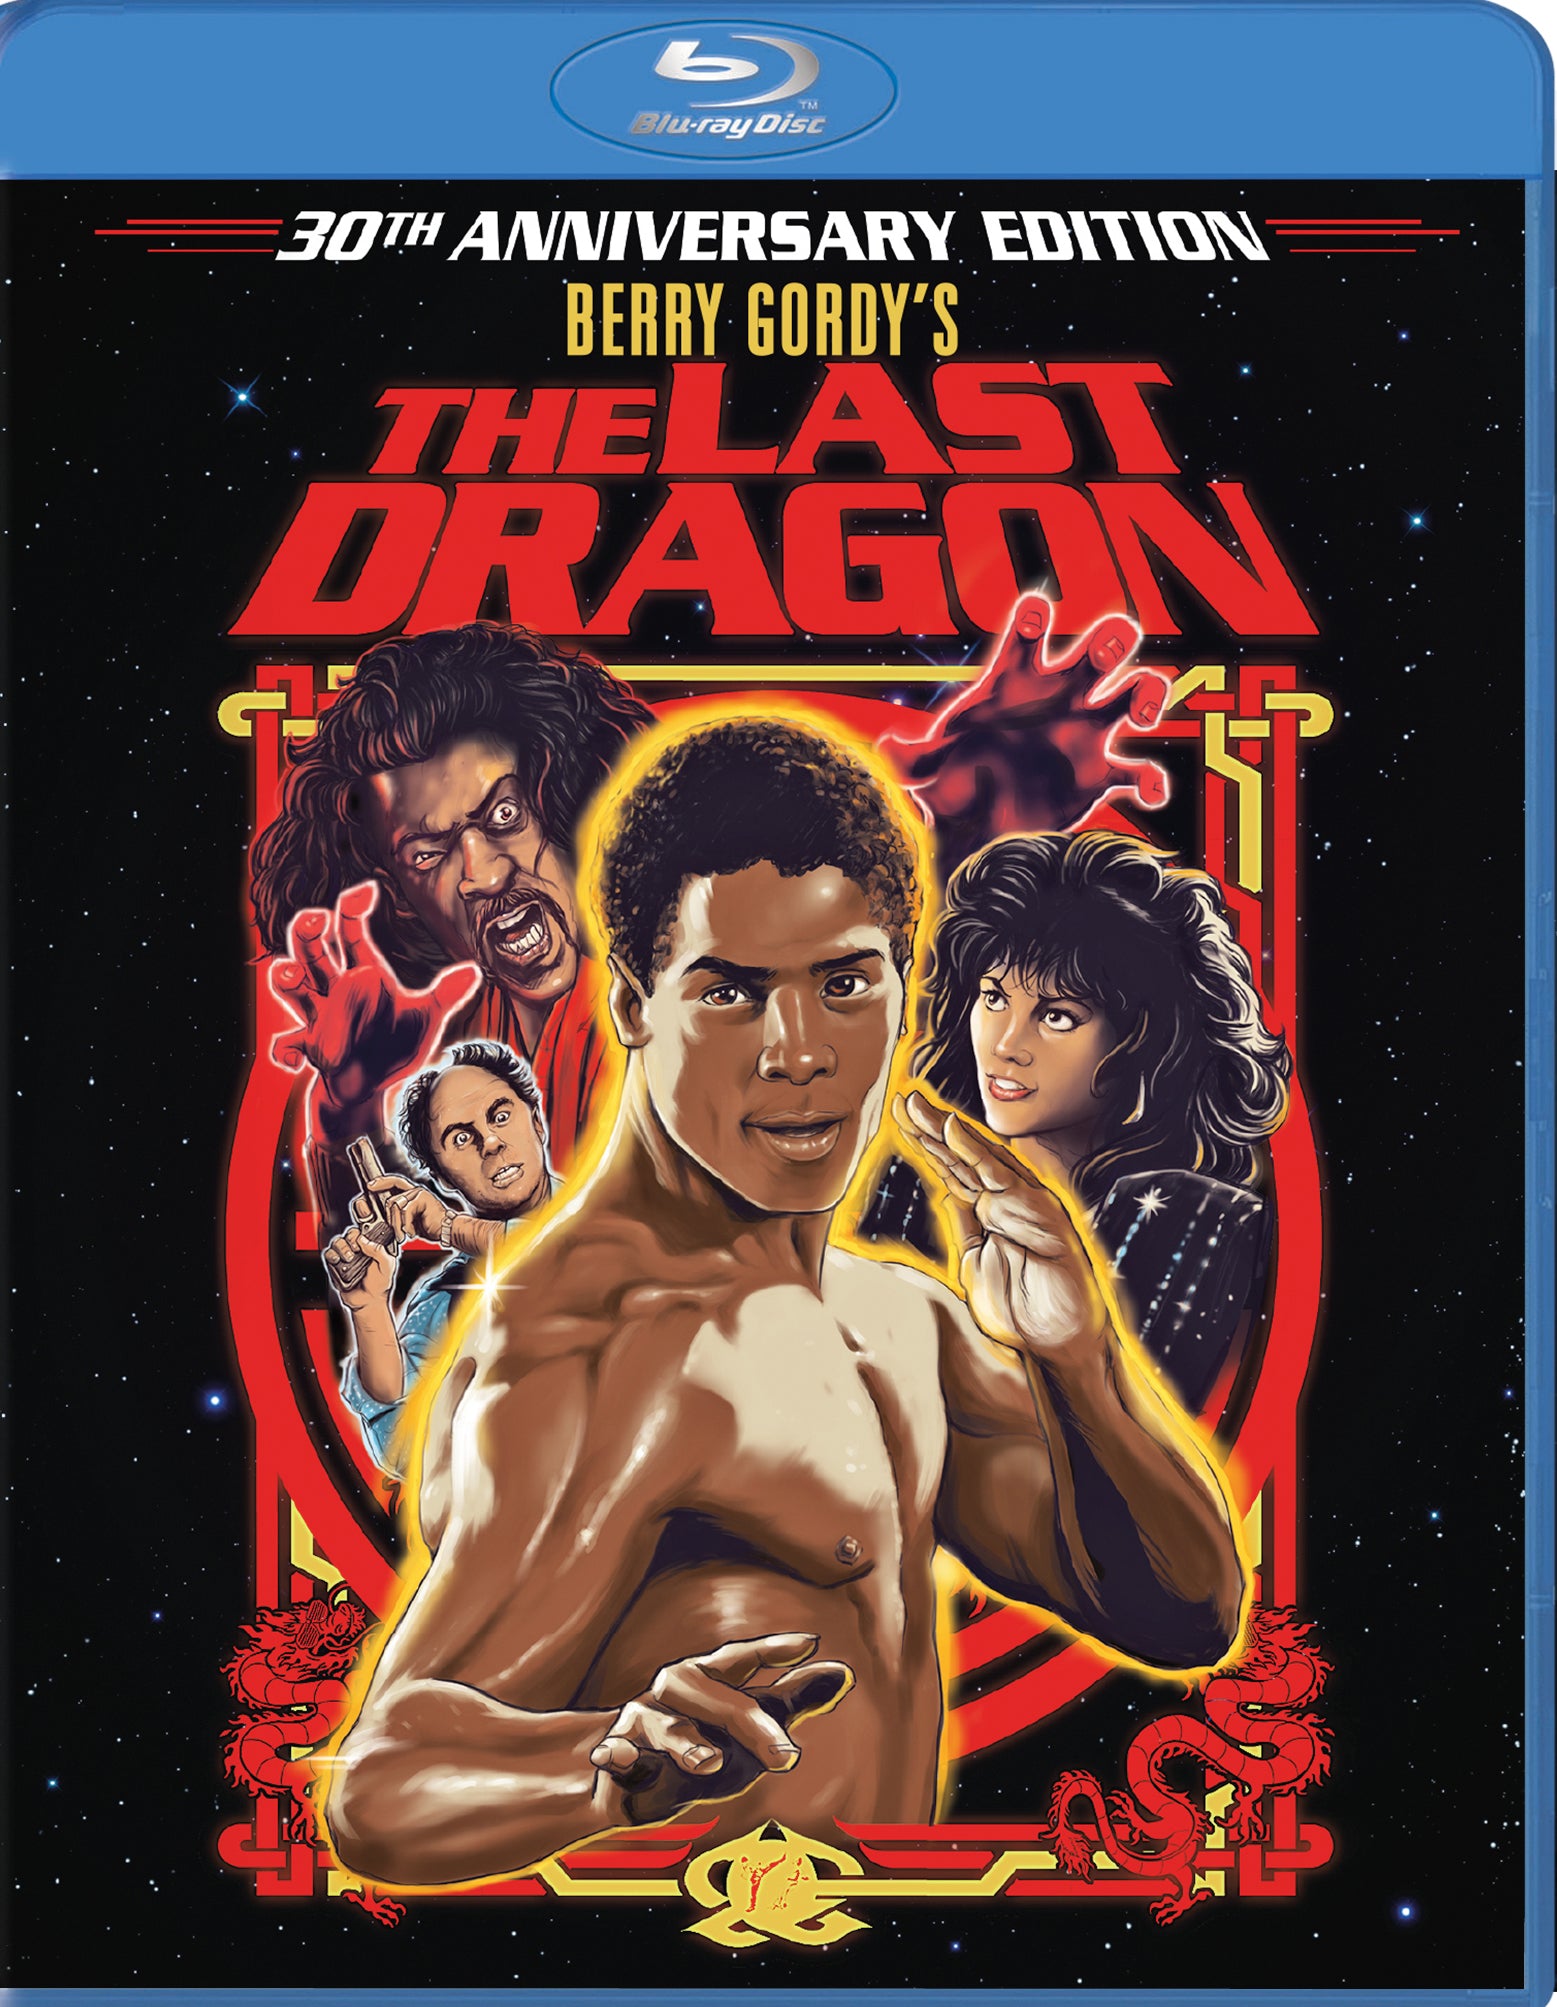 Berry Gordy's The Last Dragon [Blu-ray] cover art